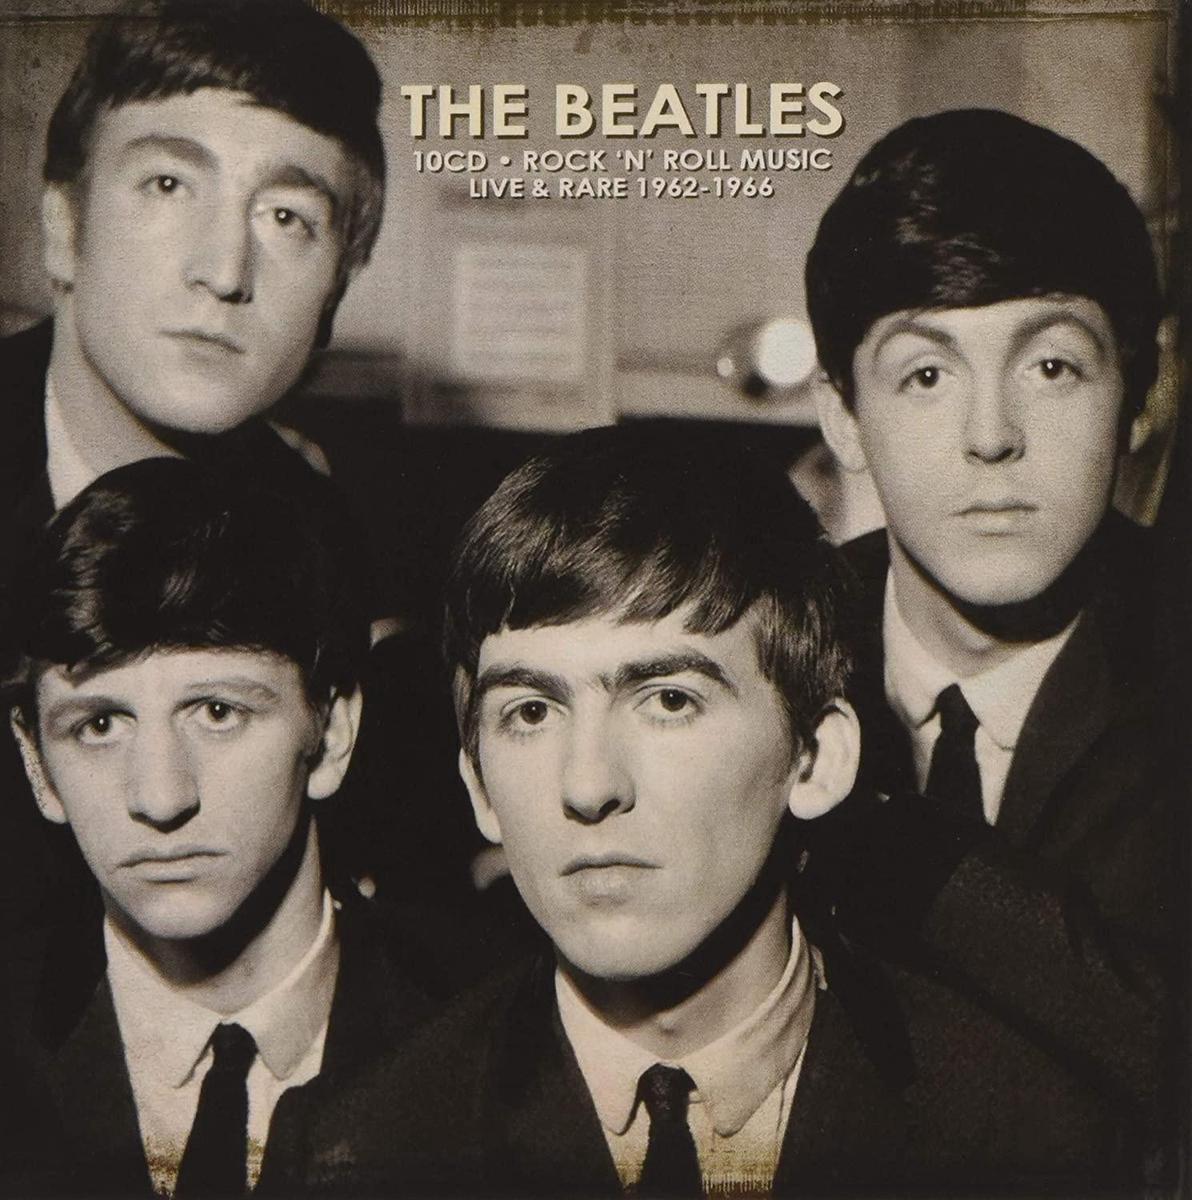 The Beatles - Rock 'n' Roll Music Live & Rare 1962 - 1966 (10CD)